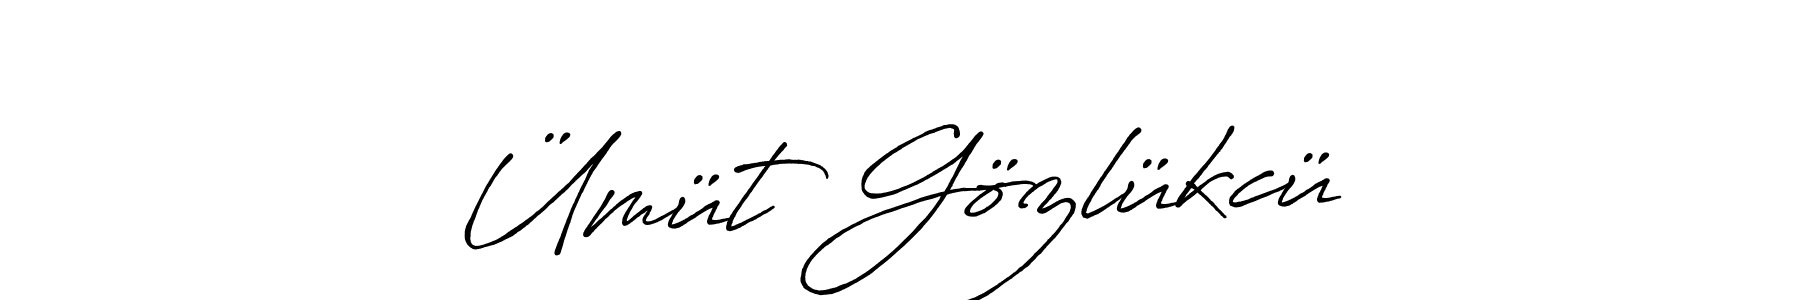 Make a beautiful signature design for name Ümüt Gözlükcü. Use this online signature maker to create a handwritten signature for free. Ümüt Gözlükcü signature style 7 images and pictures png